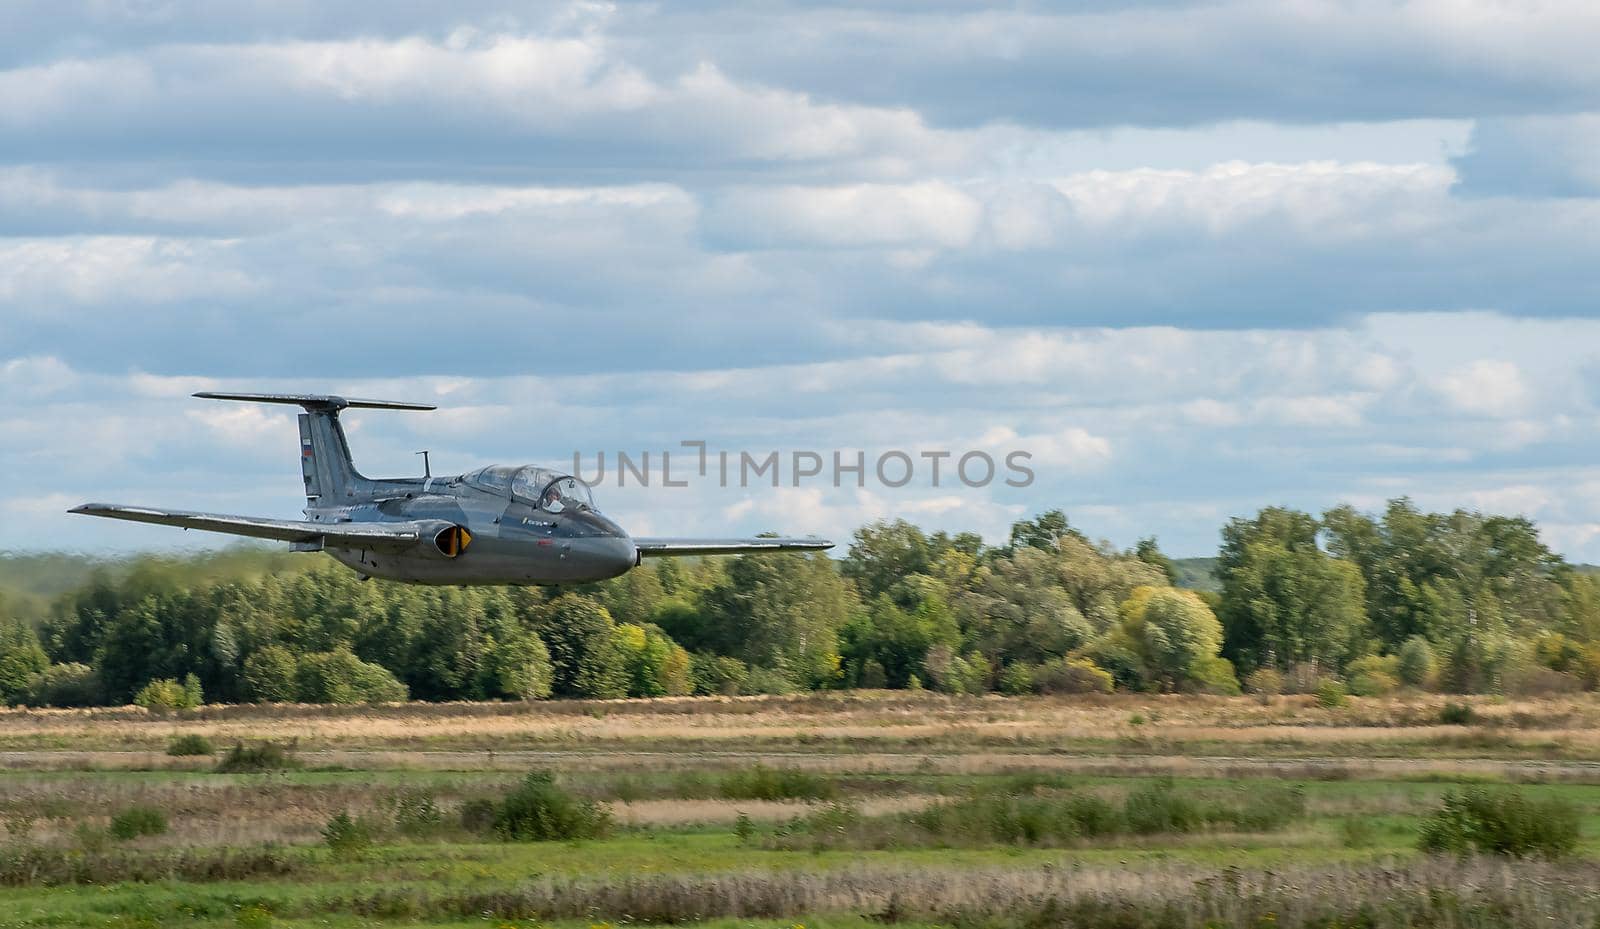 September 12, 2020, Kaluga region, Russia. The Aero L-29 Delfin training aircraft performs a training flight at the Oreshkovo airfield.